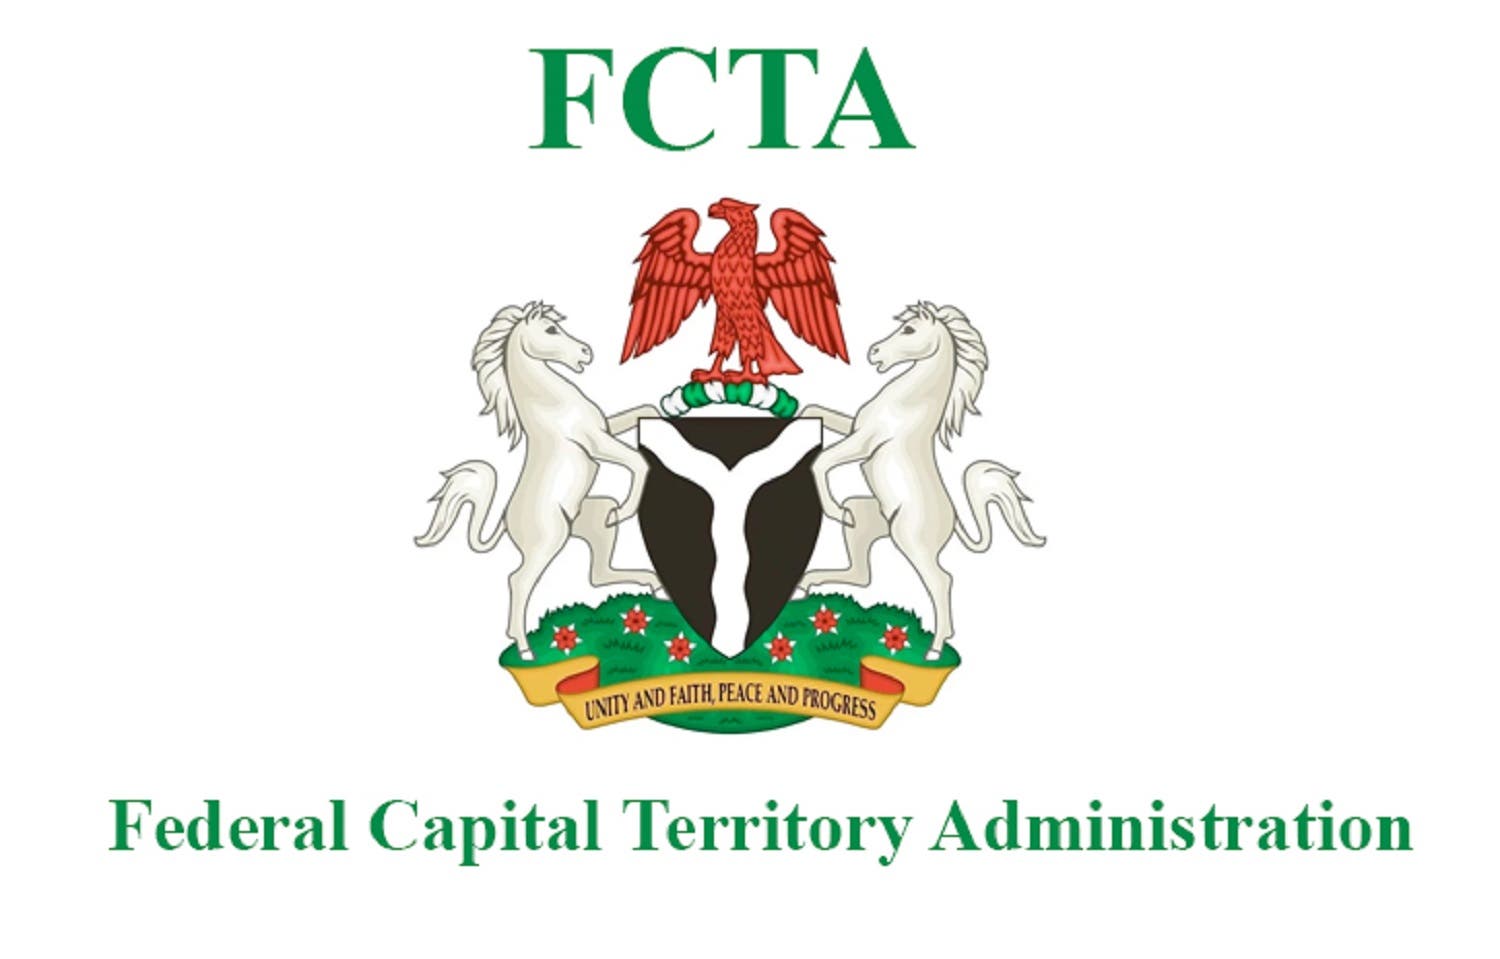 The Federal Capital Territory logo